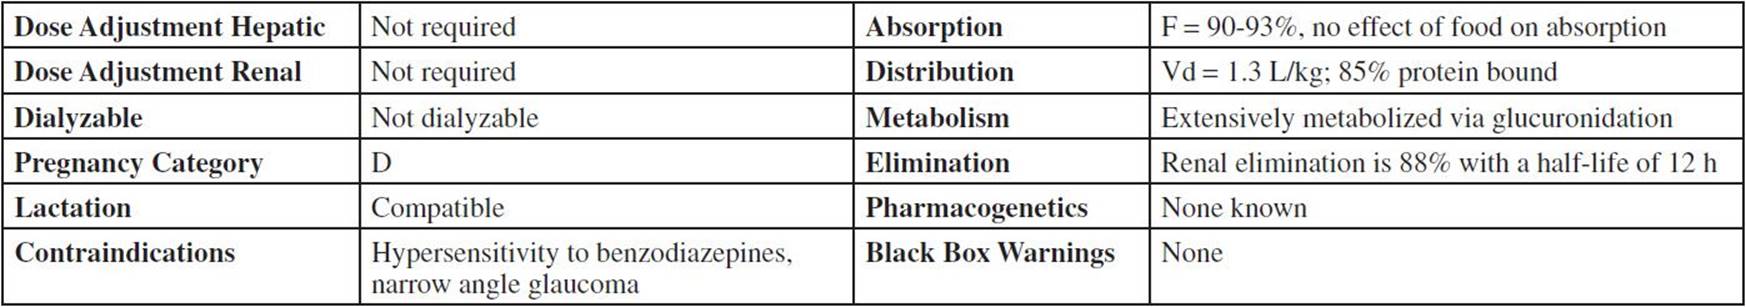 lorazepam-ativan-various-top-300-pharmacy-drug-cards